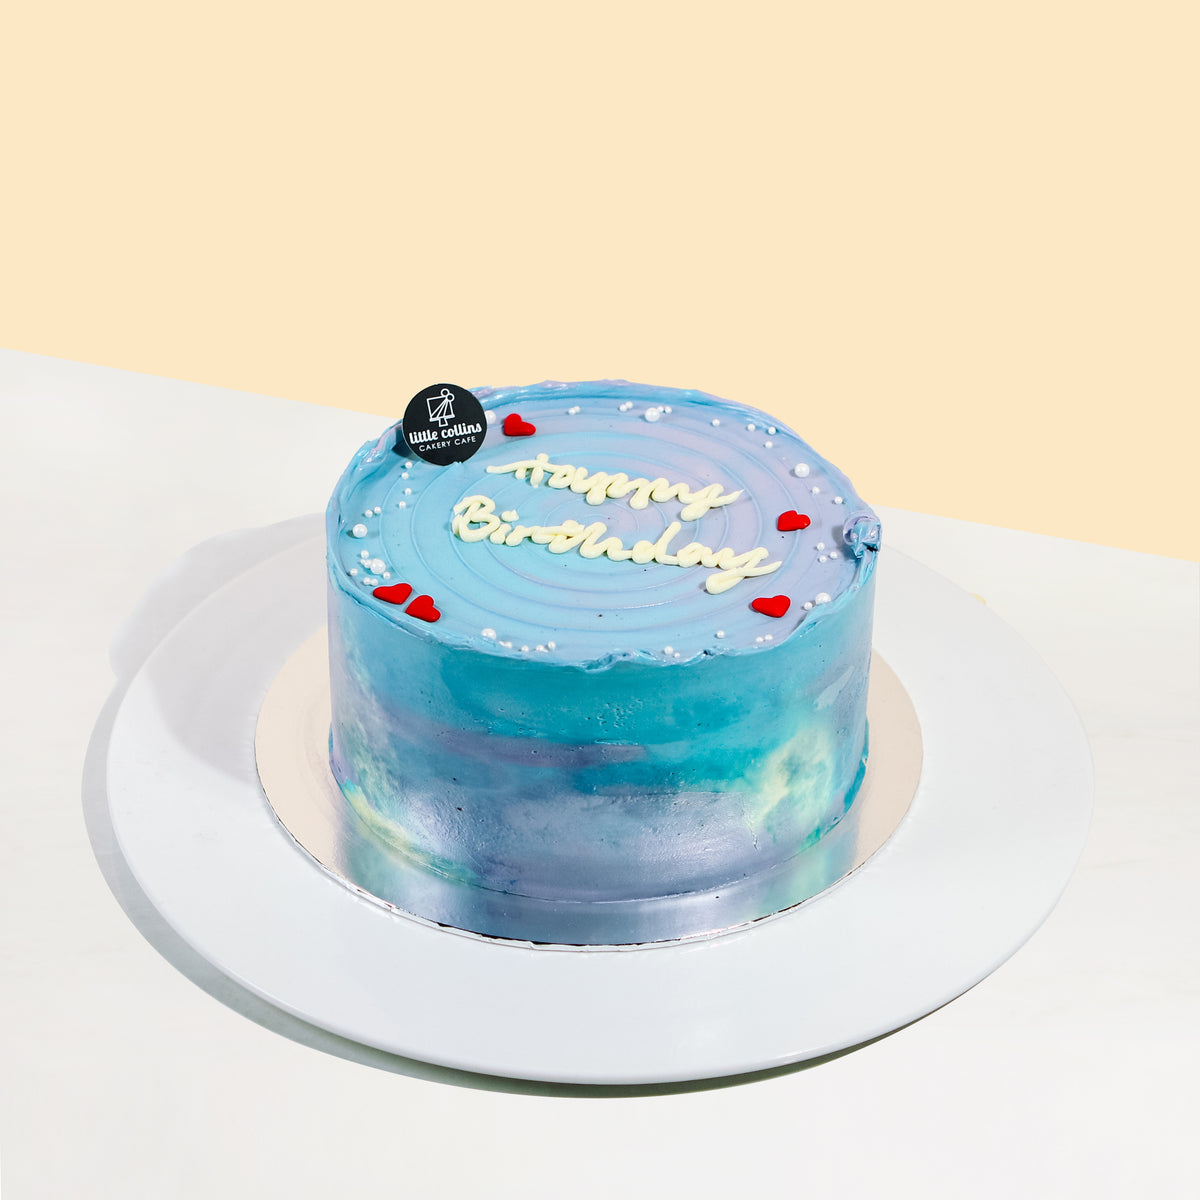 Gills Patisserie - Sang cream cake(Korean type of Birthday cake)!!#soft#creamy#생크림케익  sponge cake layered by whipped cream and fresh fruits) | Facebook